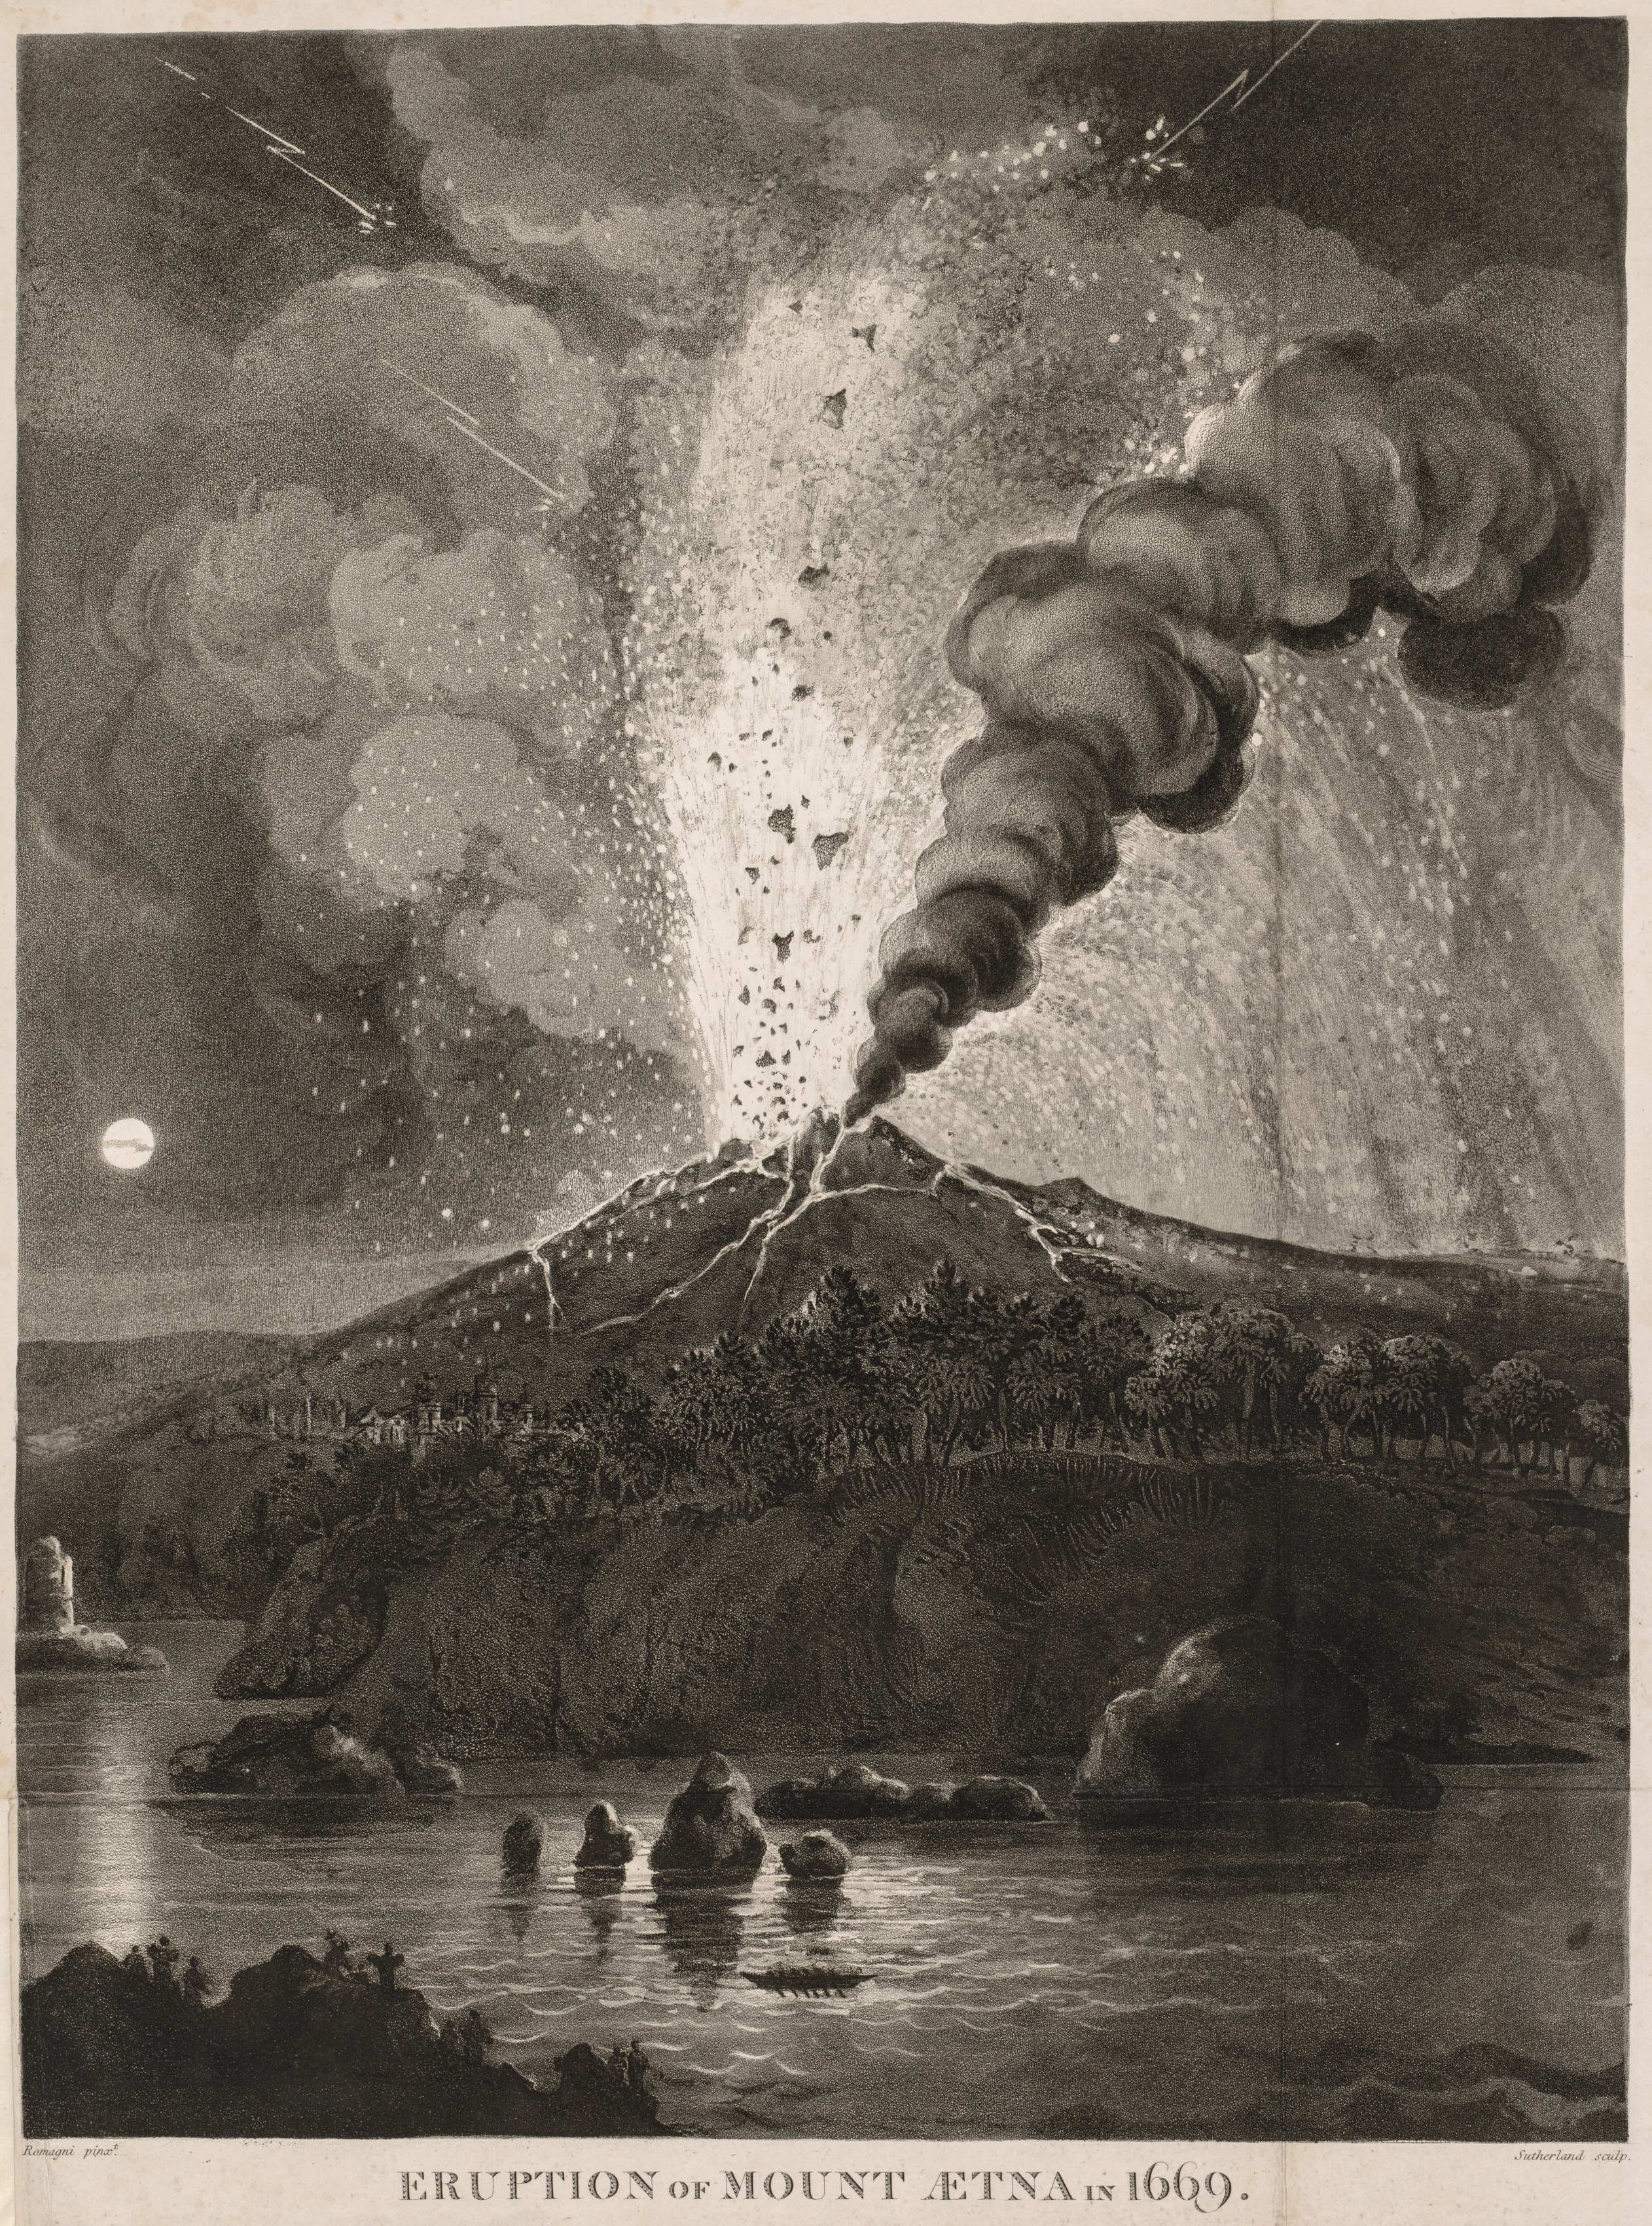 Eruption of Mount Aetna in 1669